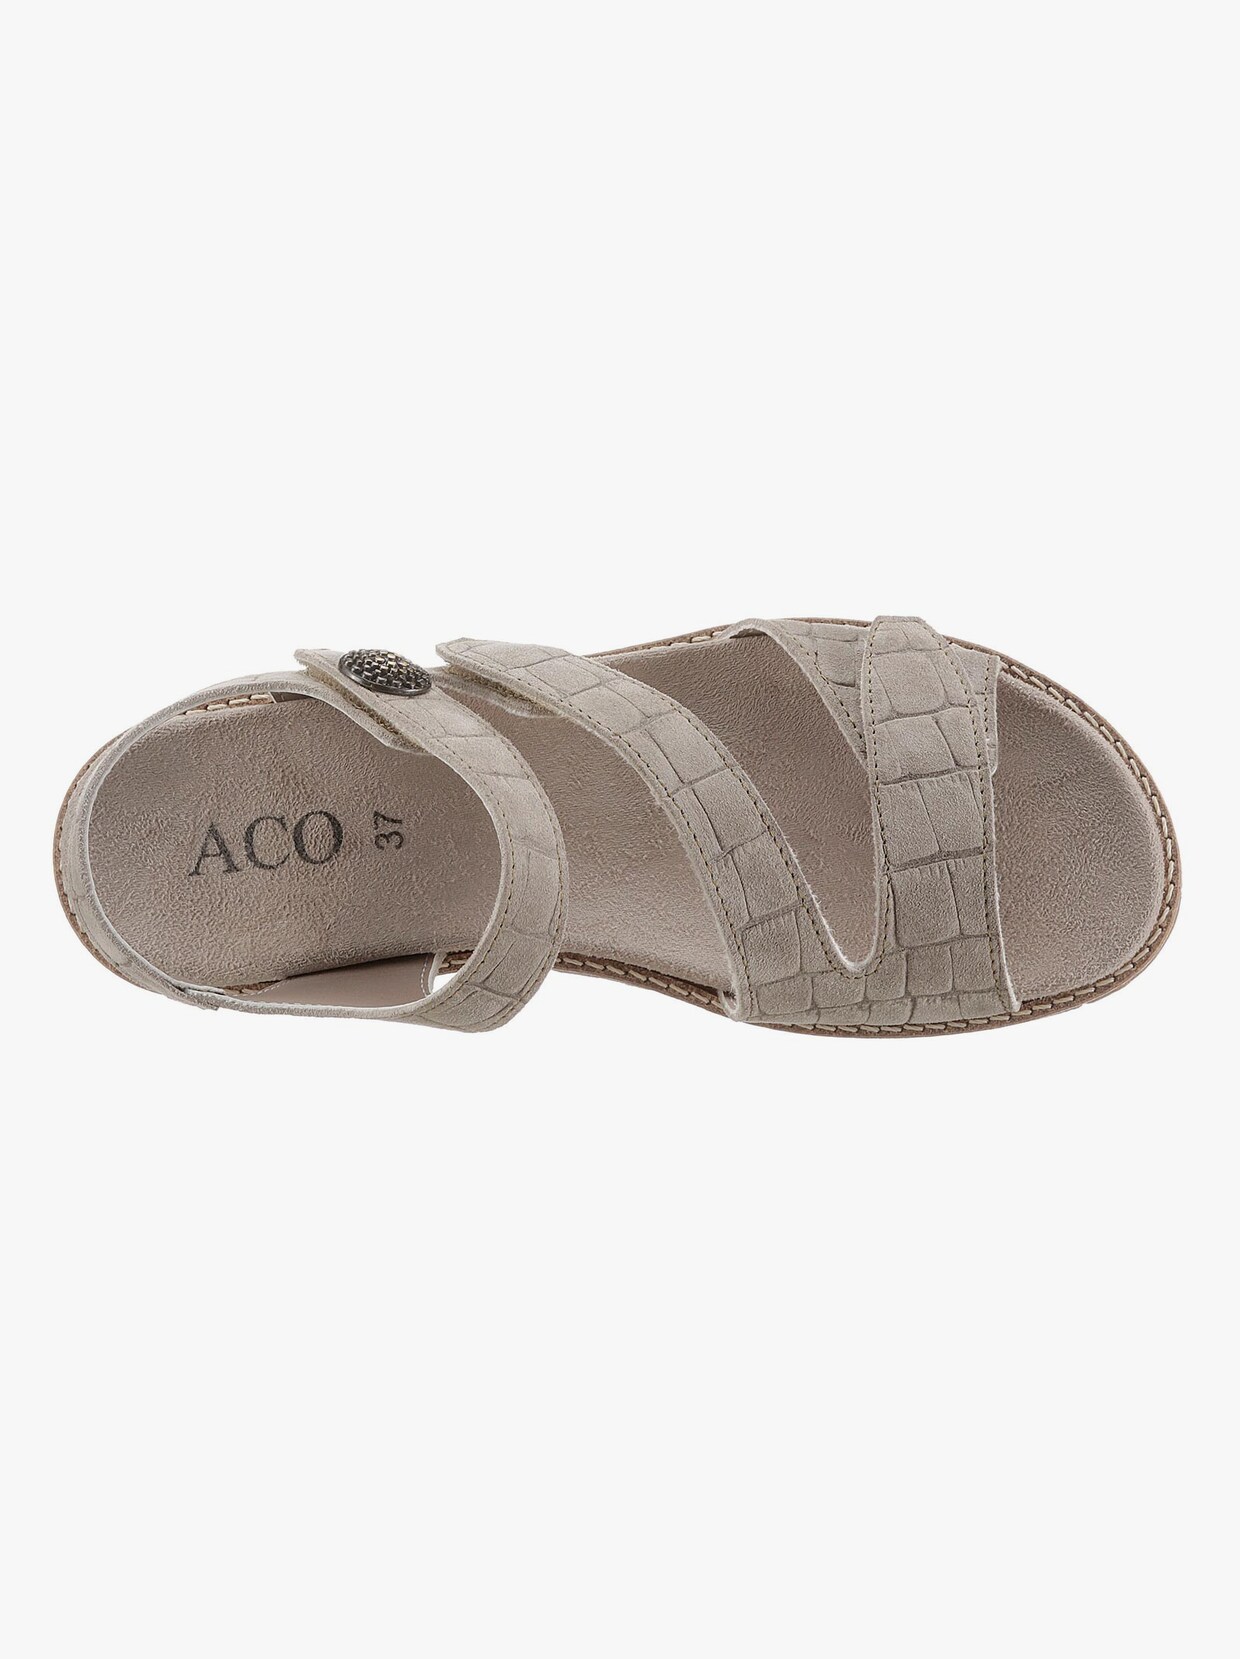 ACO Sandalette - khaki